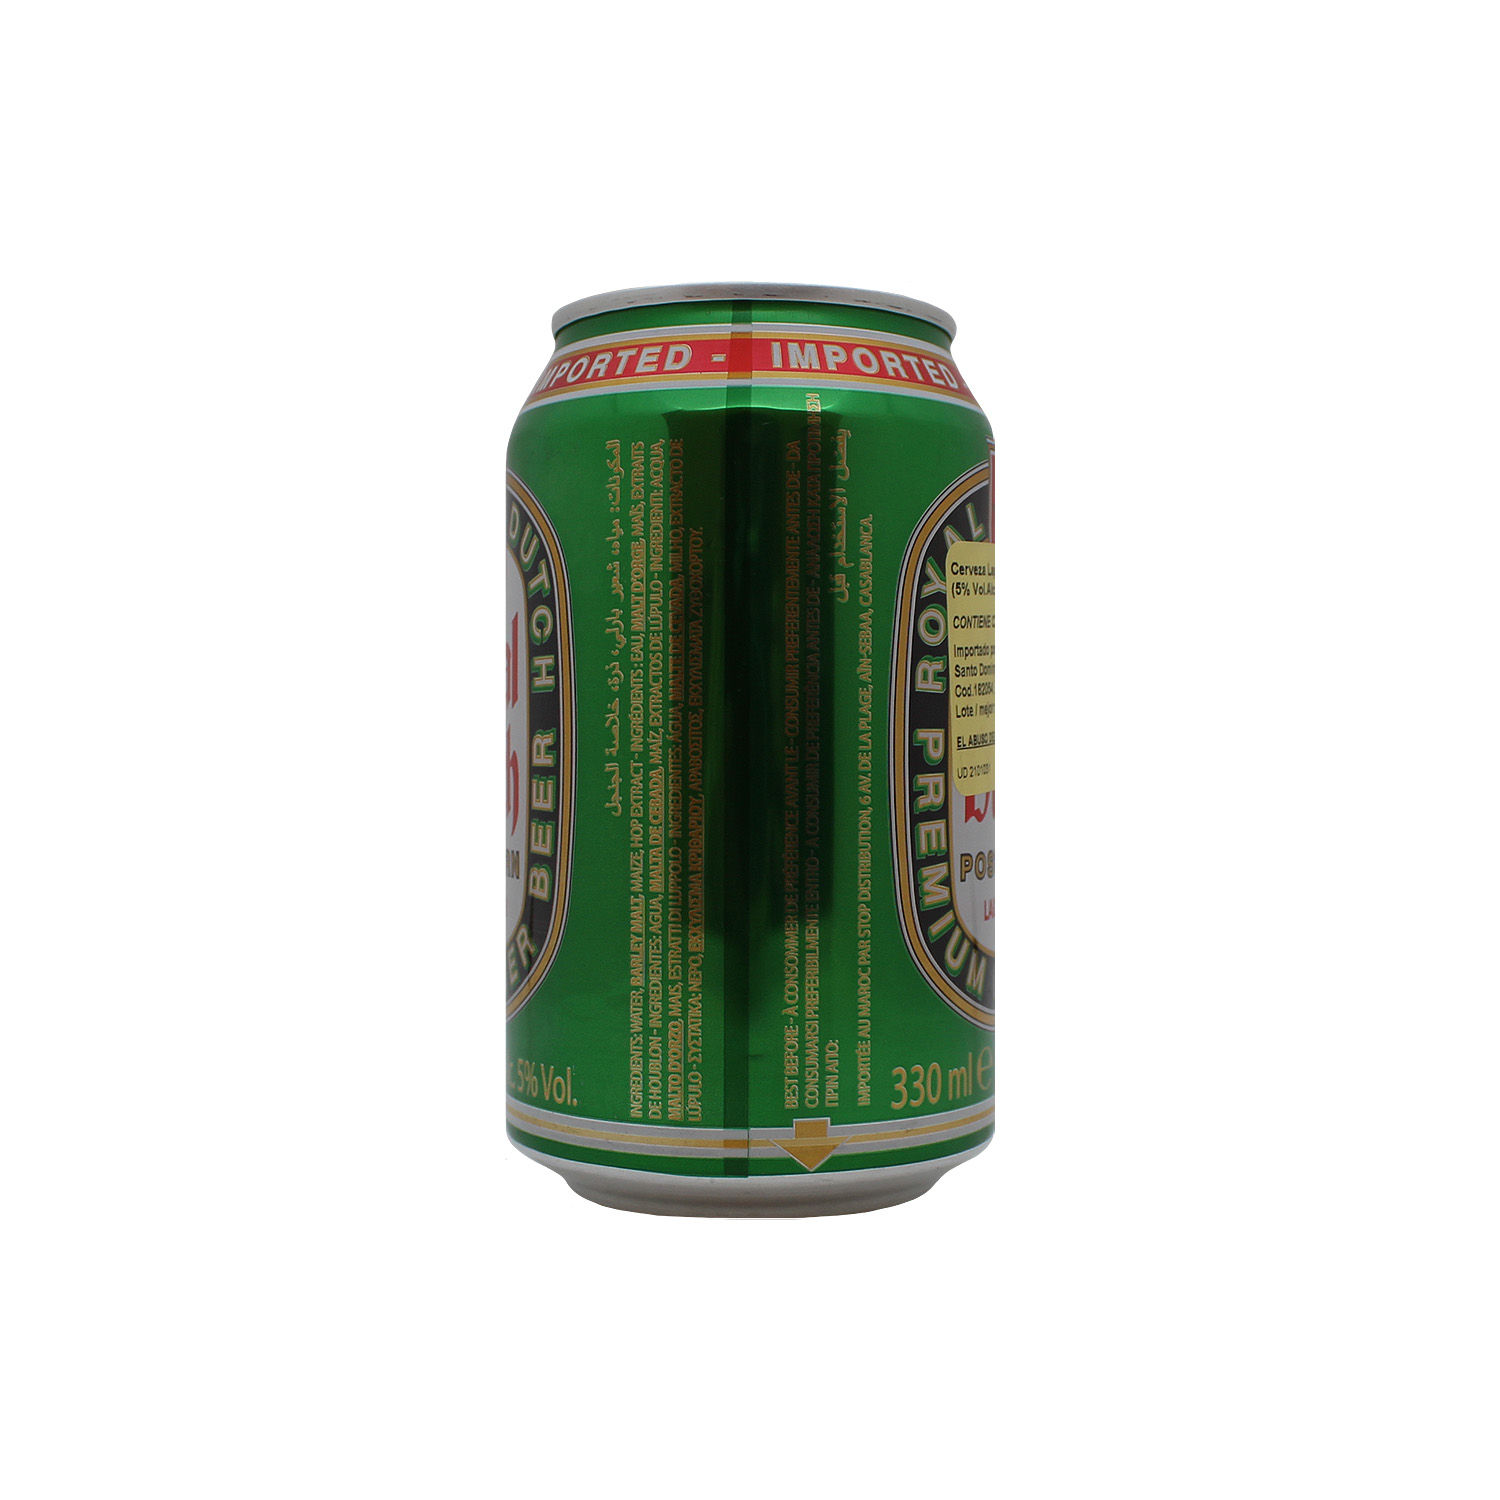 Cerveza Importada Lager 5% Alc. Holanda Royal Dutch Lata 330 Ml